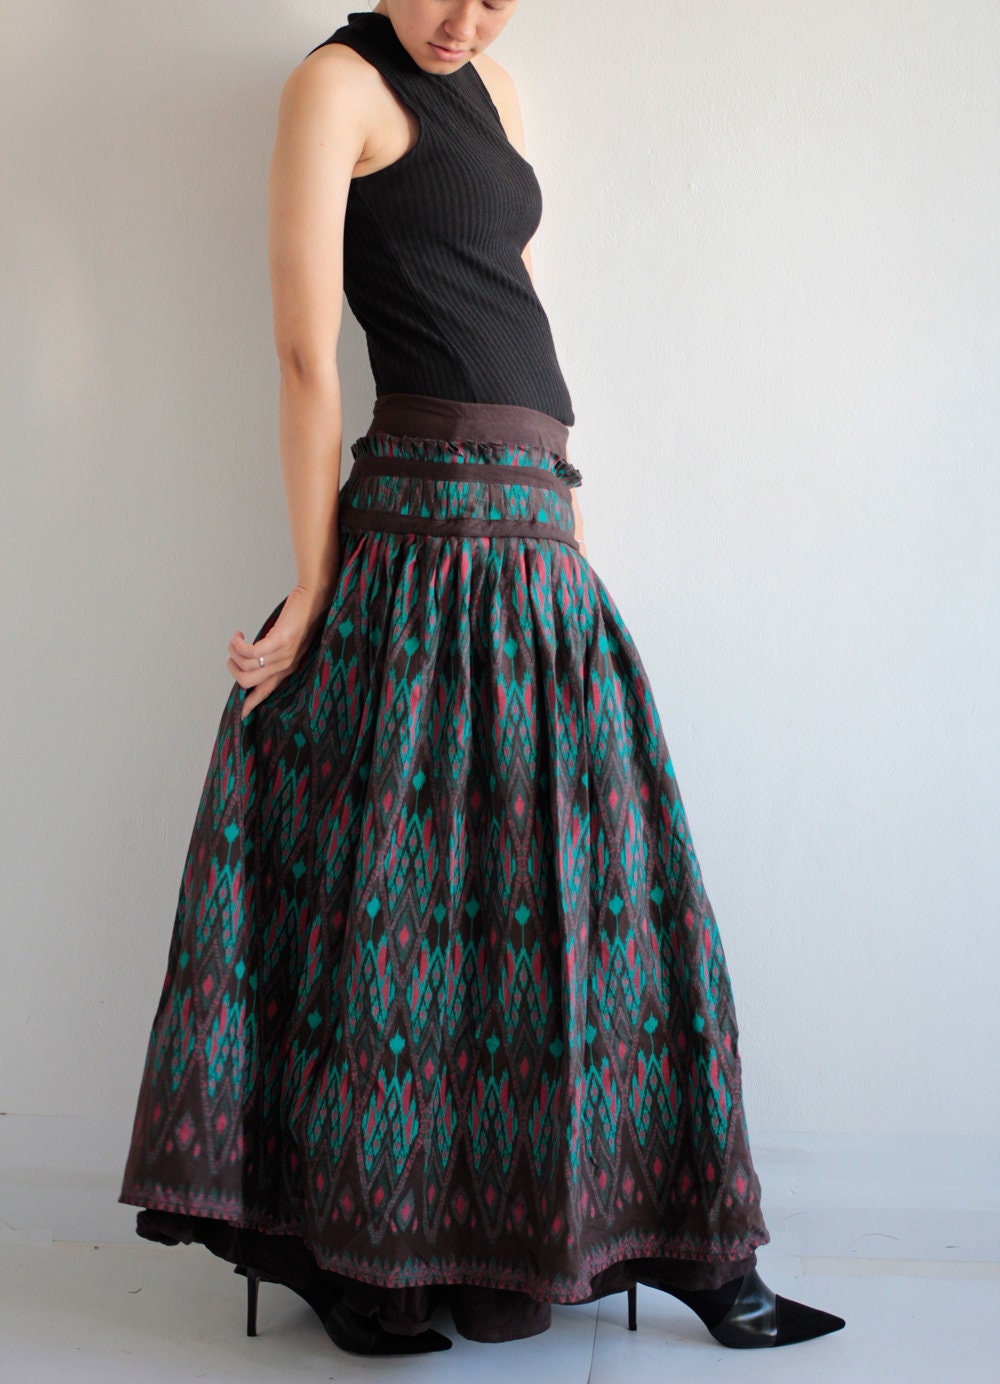 Maxi skirt 2 layers full length hippie/chic/boho/......cotton | Etsy